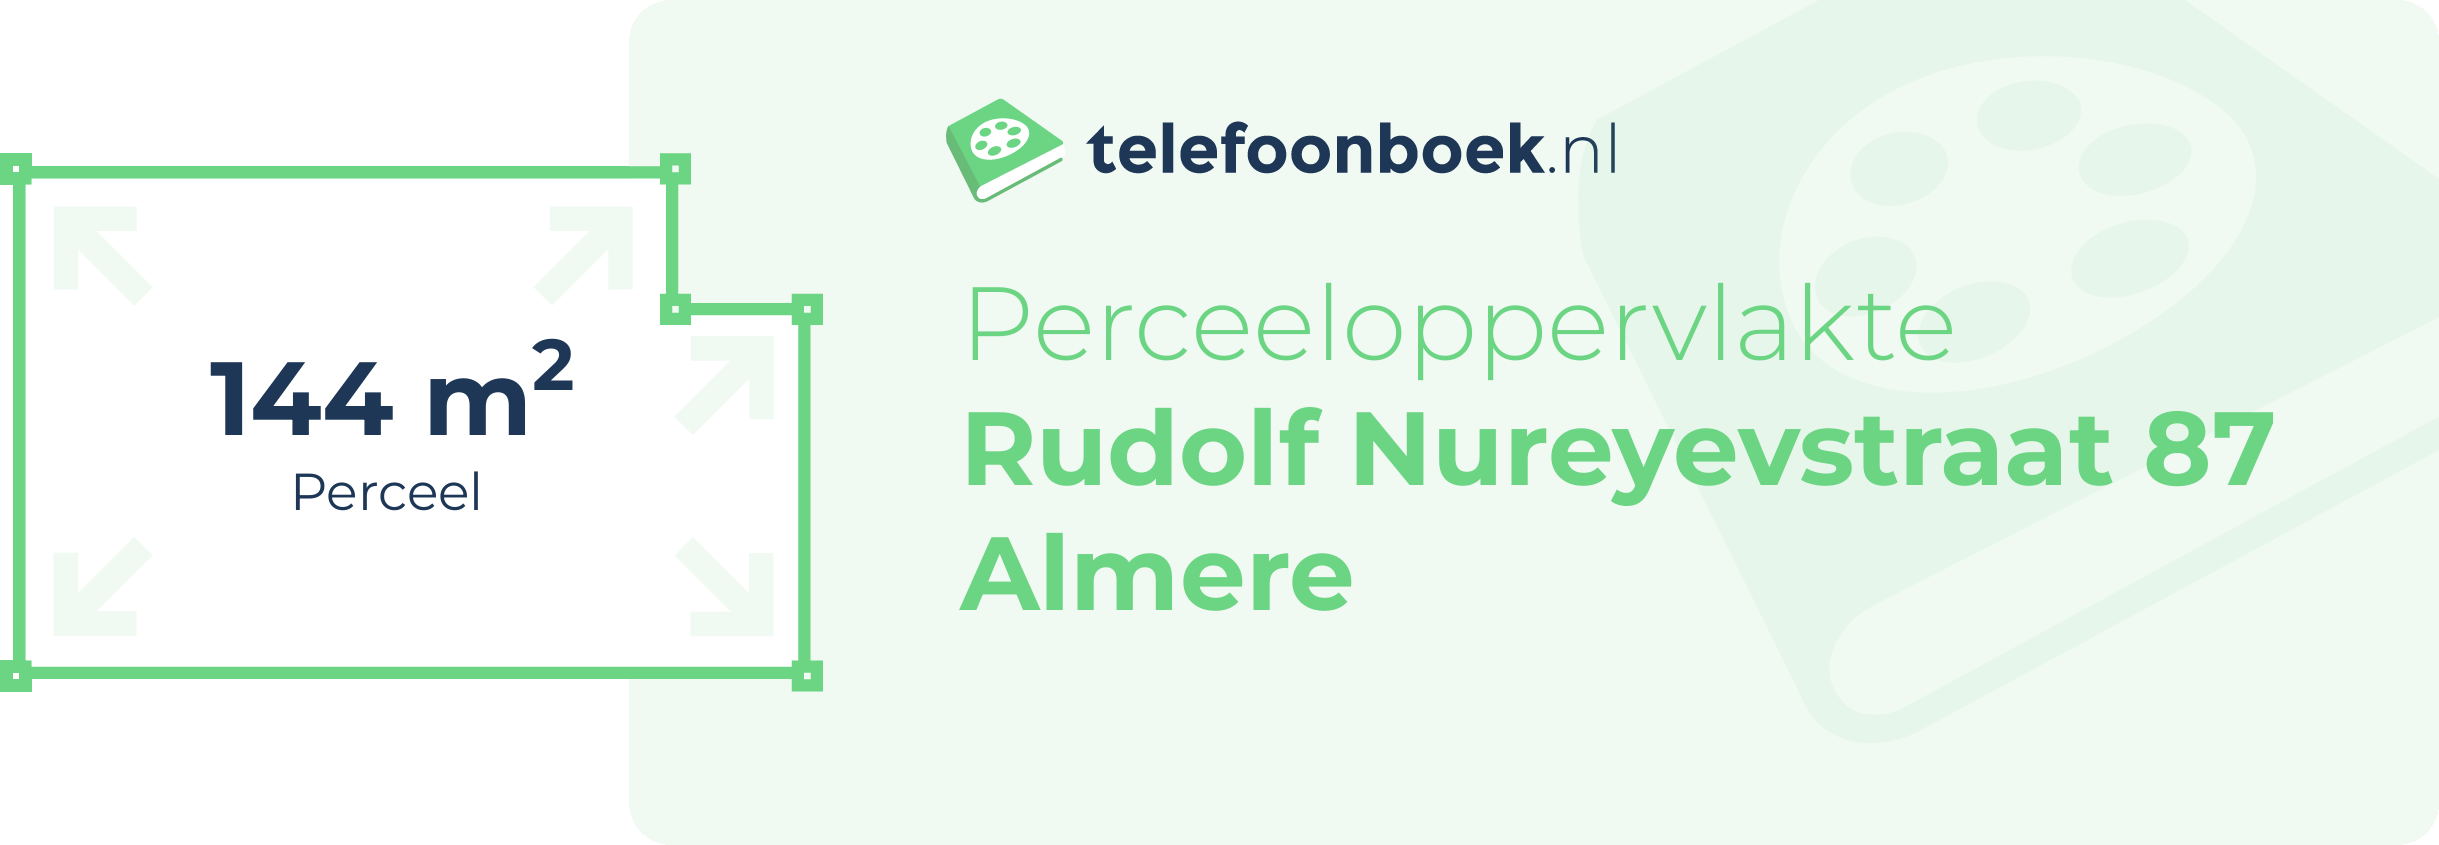 Perceeloppervlakte Rudolf Nureyevstraat 87 Almere